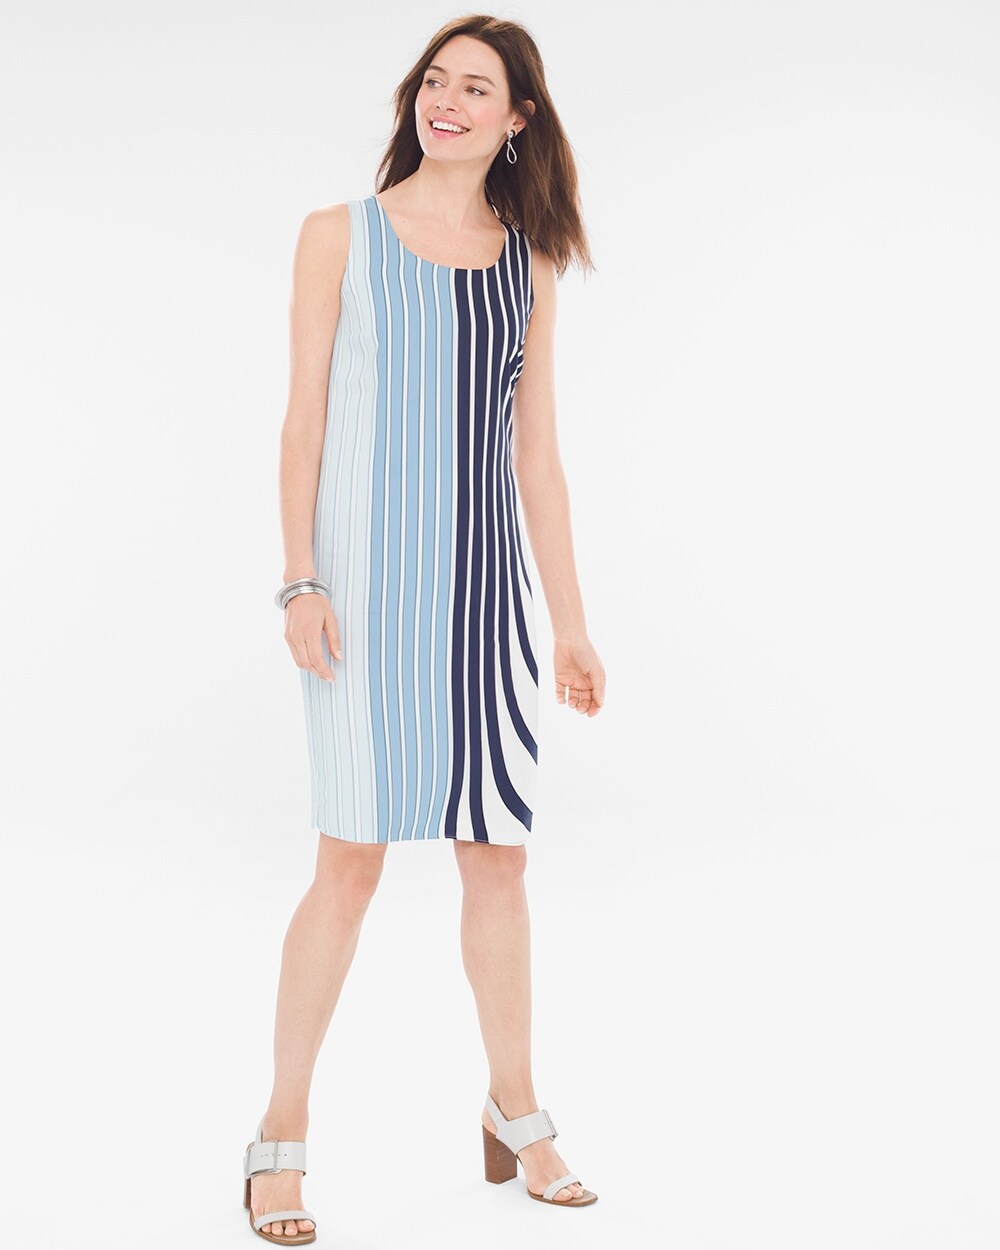 Cool Striped Dress